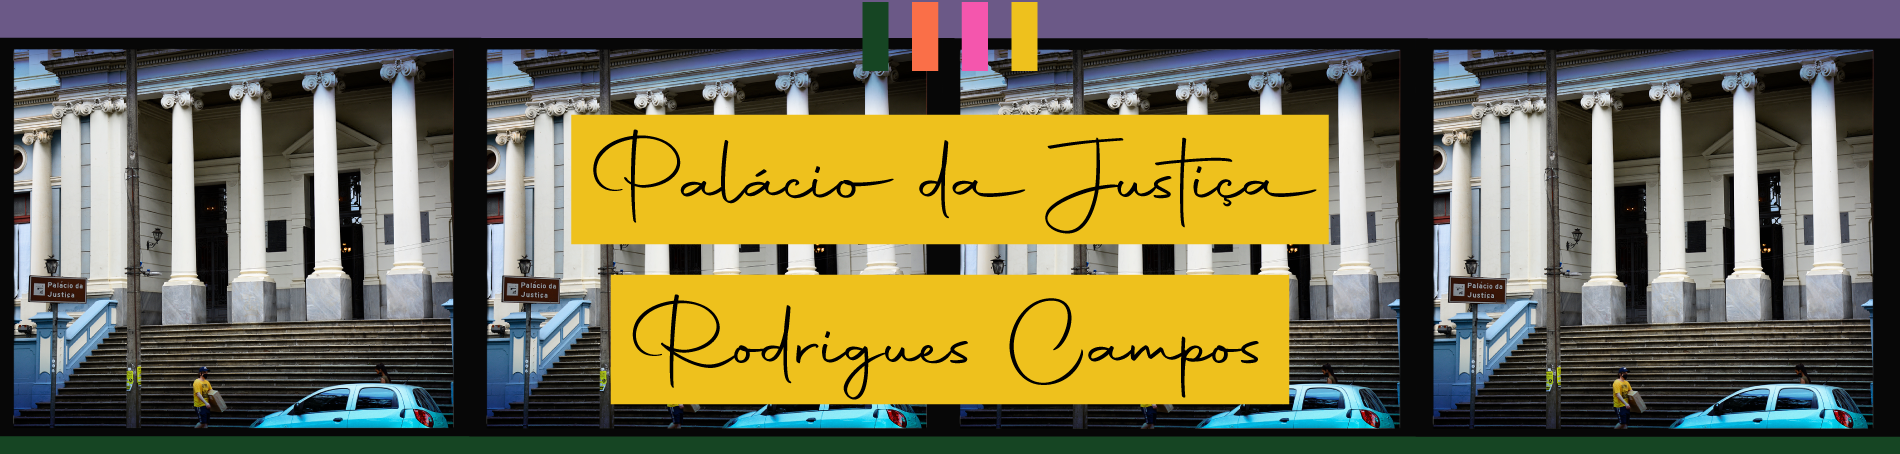 Palácio da Justiça Rodrigues Campos